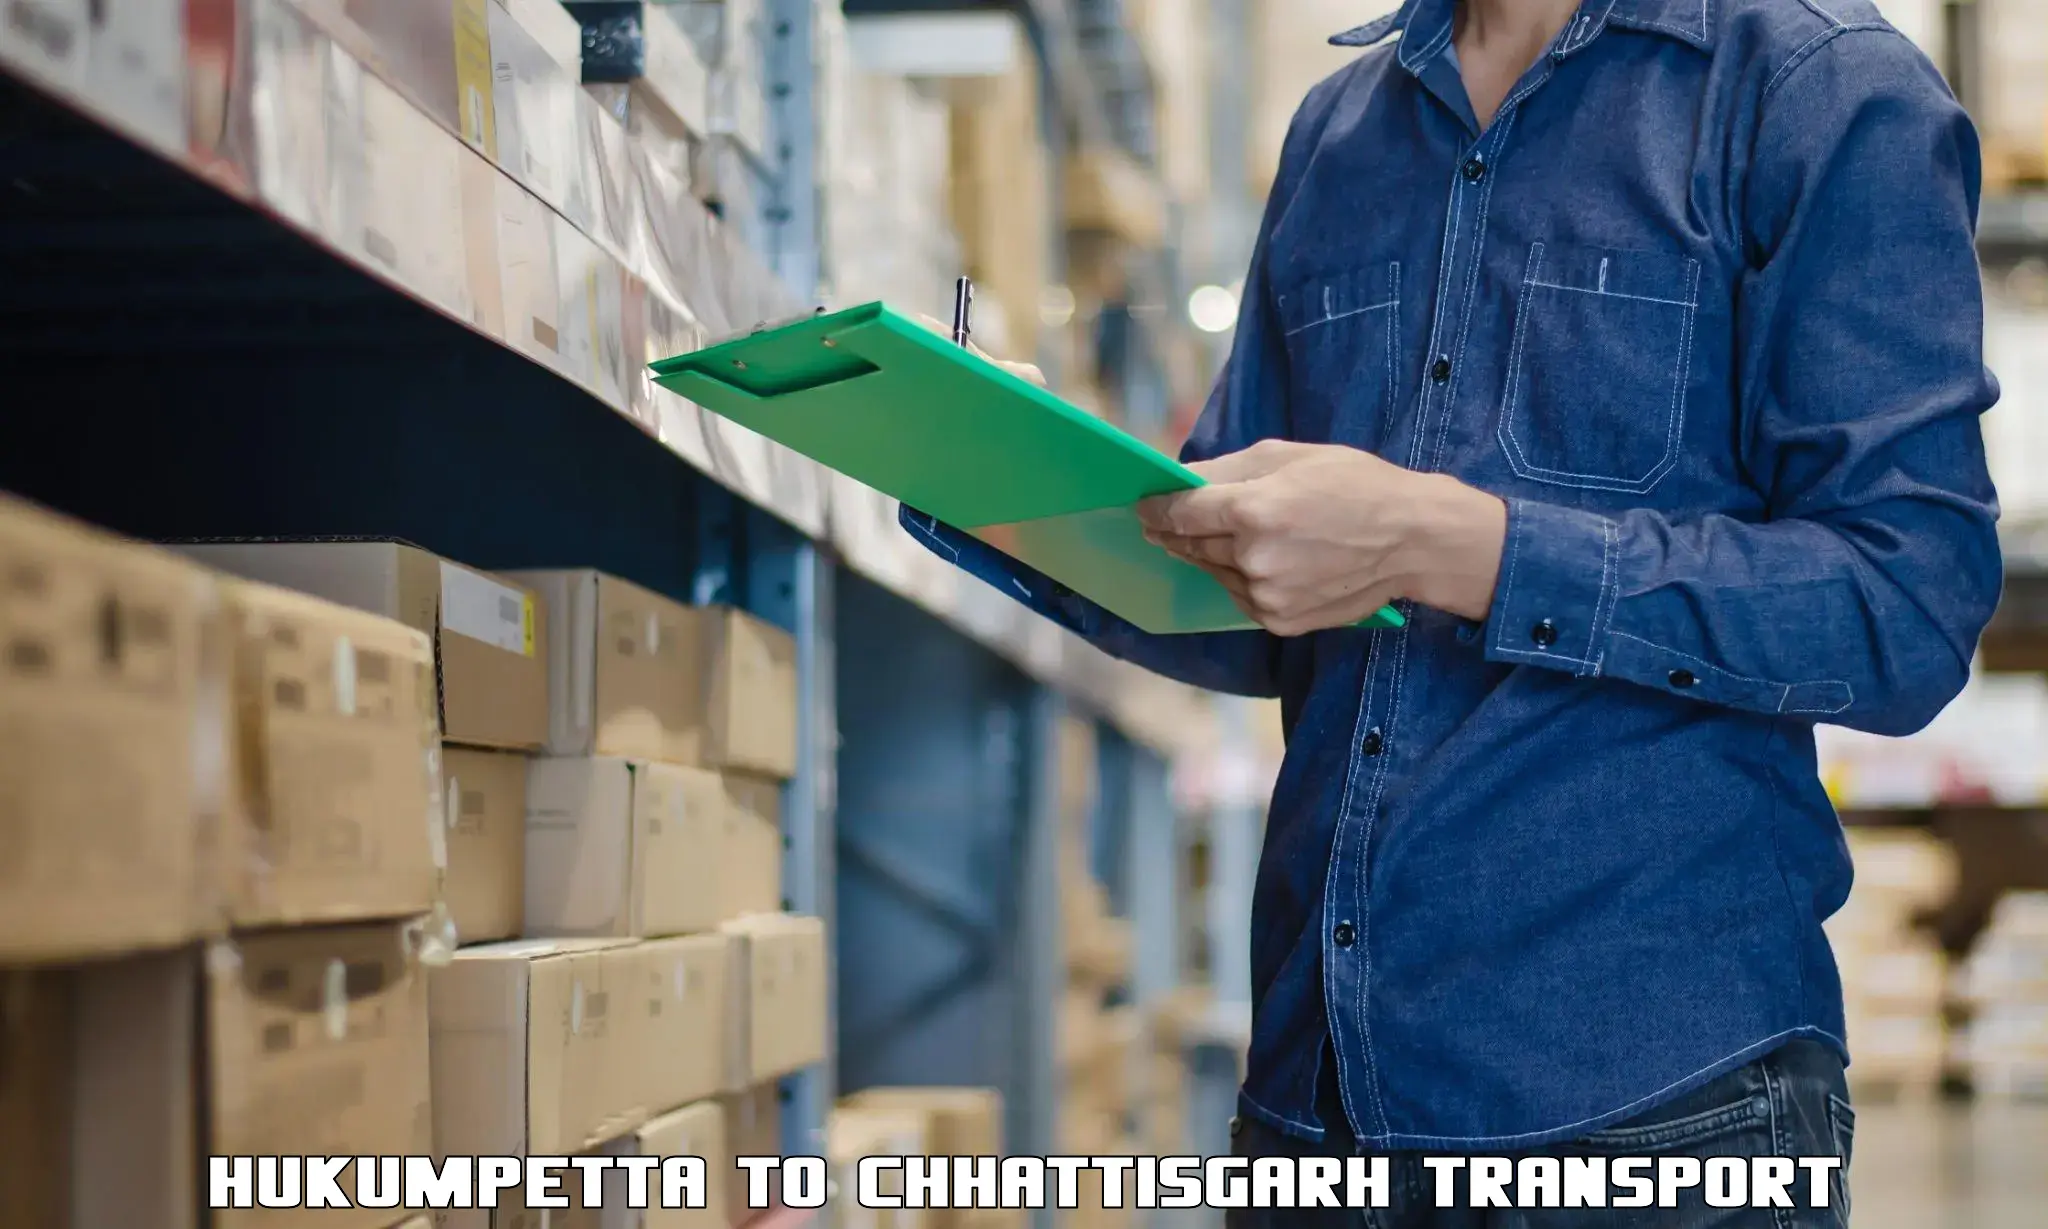 Container transport service Hukumpetta to Chhattisgarh